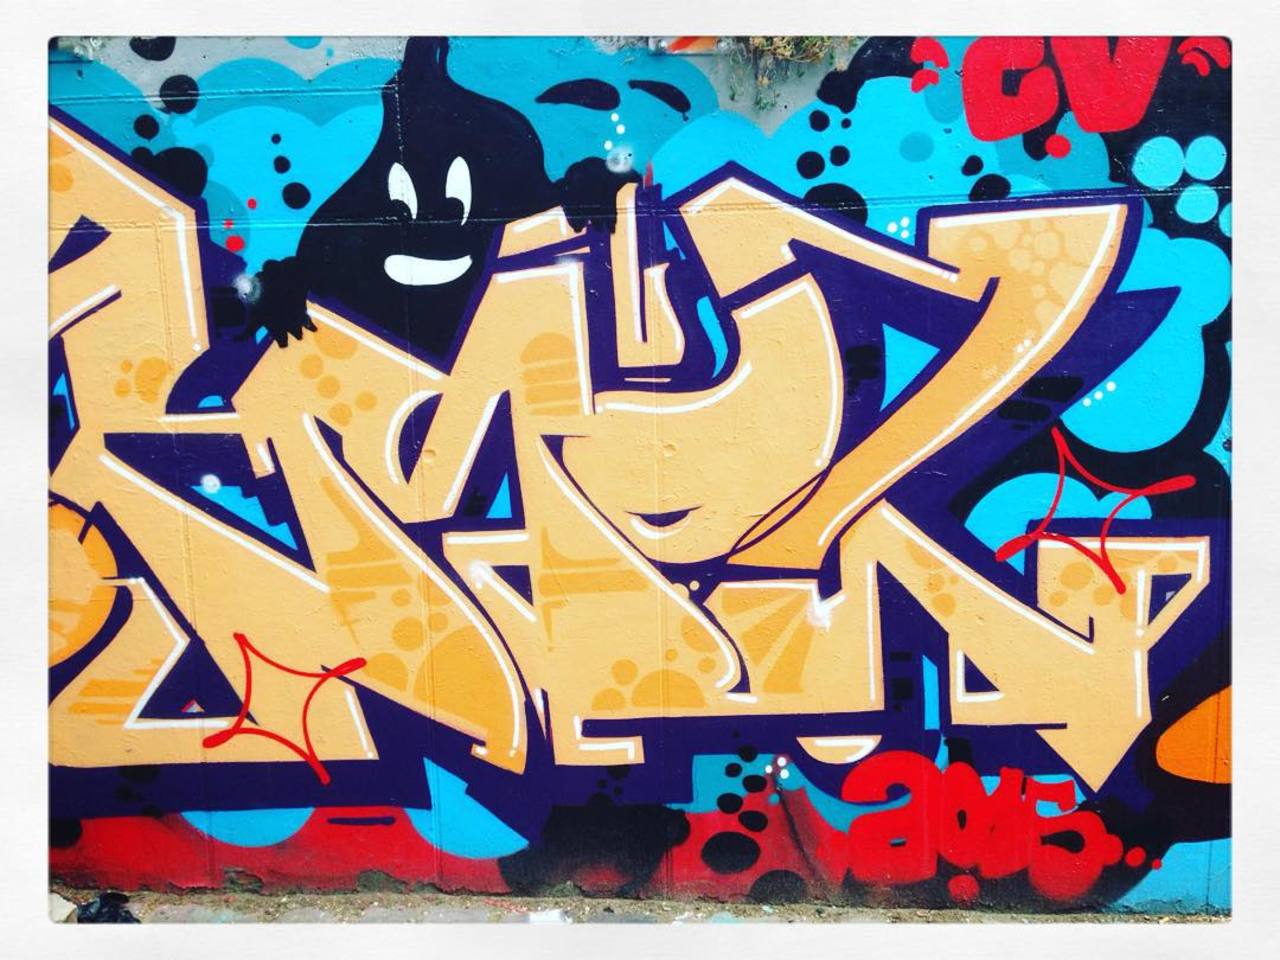 circumjacent_fr: #Paris #graffiti photo by cibti4987 http://ift.tt/1iCbozs #StreetArt http://t.co/XZSwEHcj76